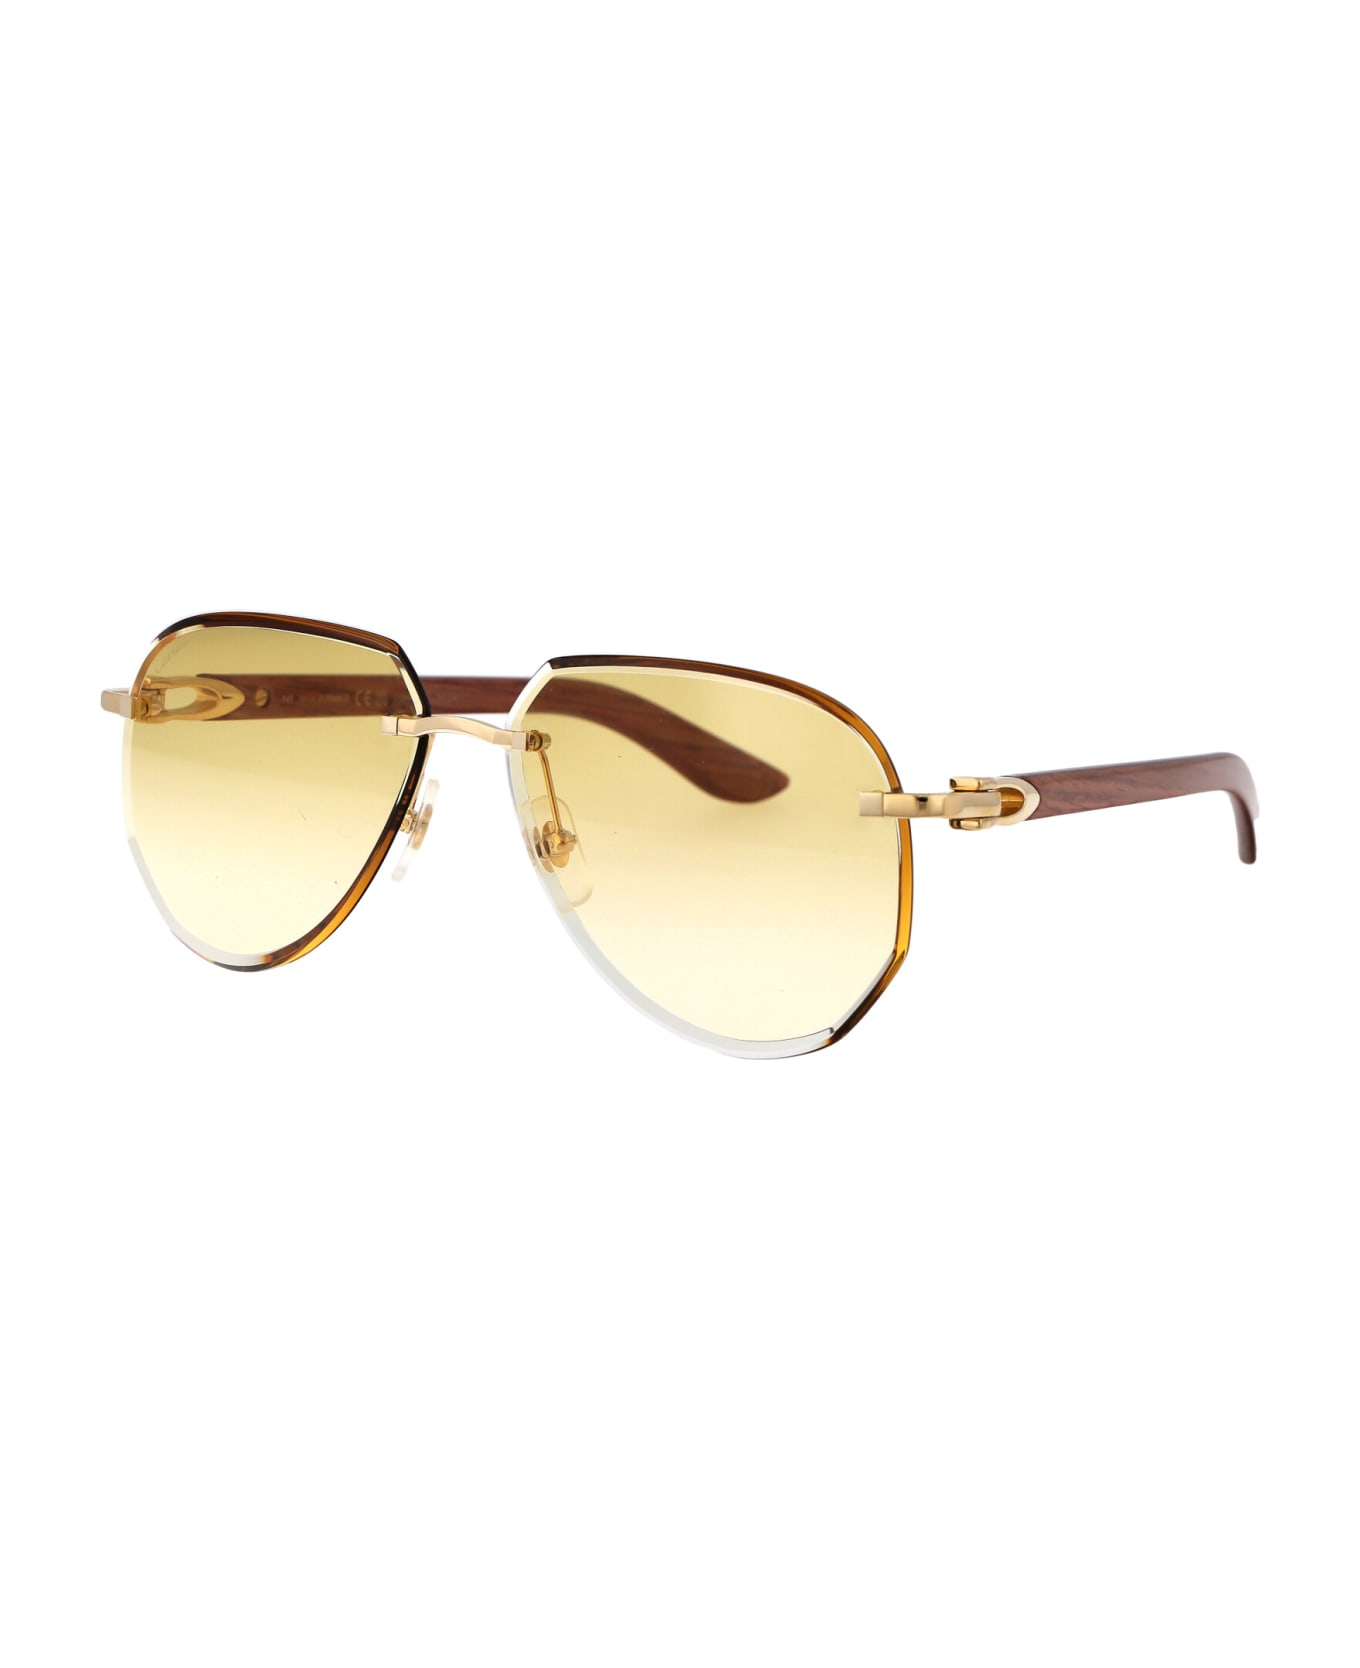 Cartier Eyewear Ct0440s Sunglasses - 004 GOLD BROWN YELLOW サングラス